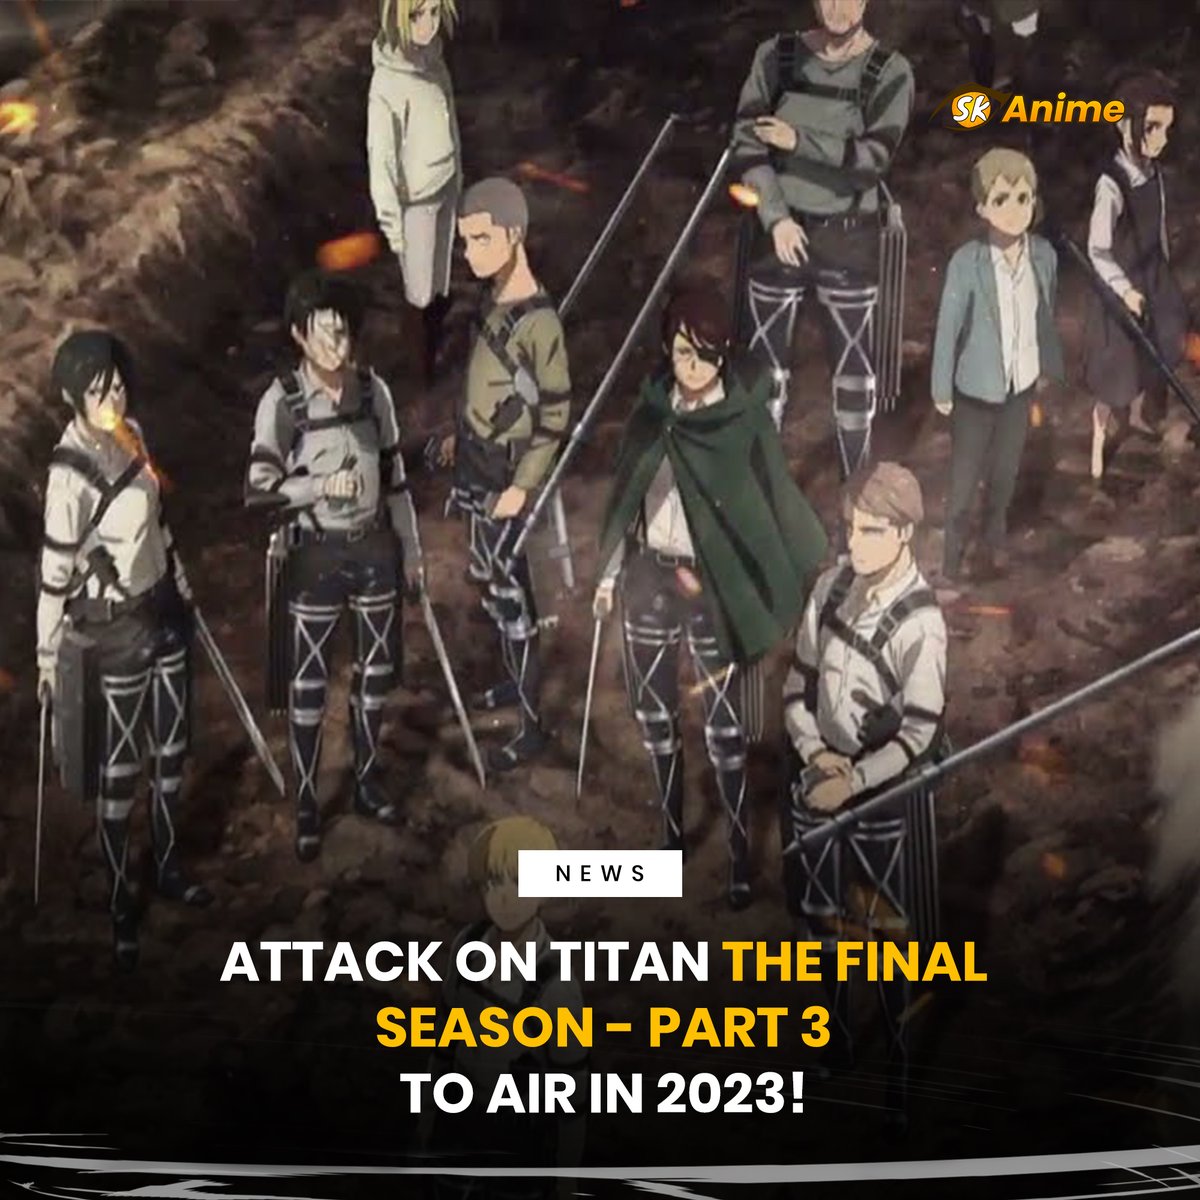 Attack on Titan' Final Season Part 3 Announced for 2023